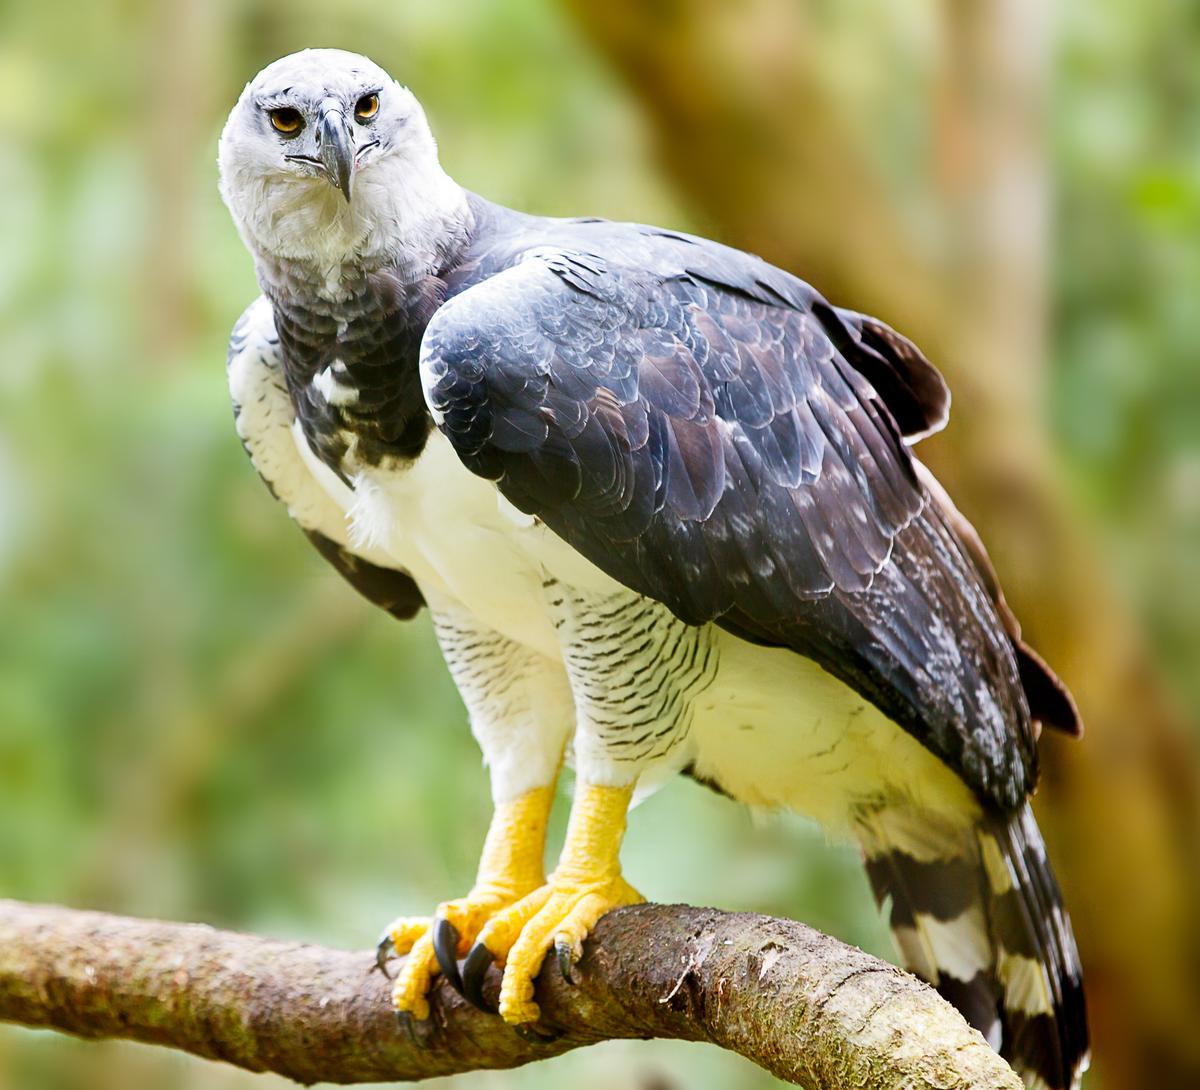 A harpy eagle in the rainforest in Brazil. (MarcusVDT/Shutterstock)